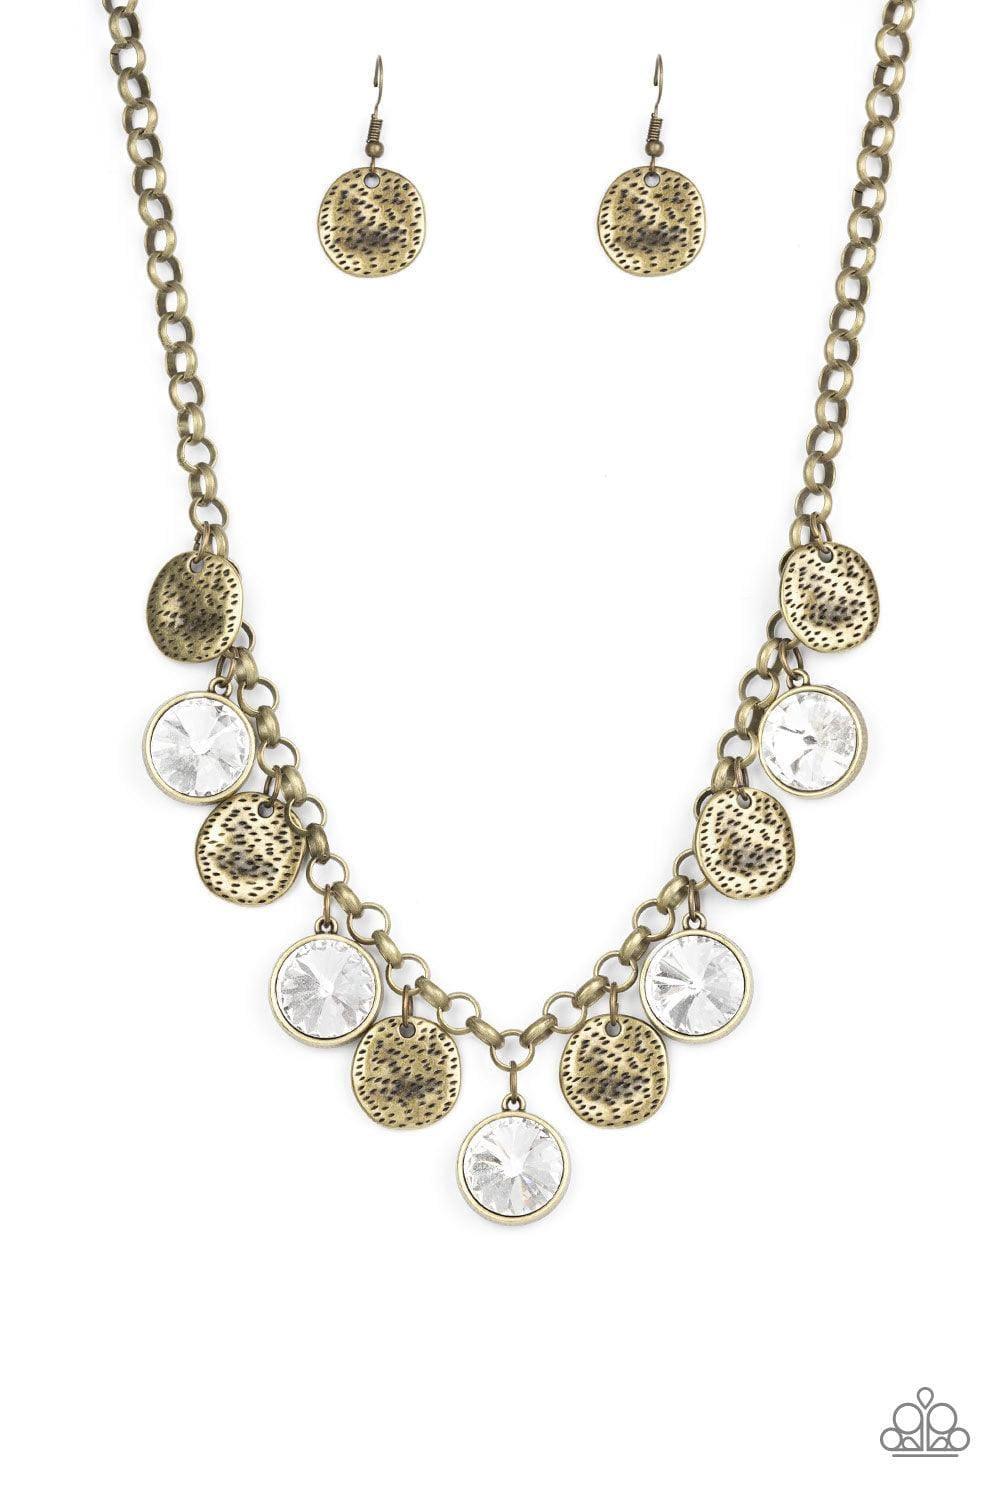 Paparazzi Accessories - Spot On Sparkle - Brass Necklace - Bling by JessieK